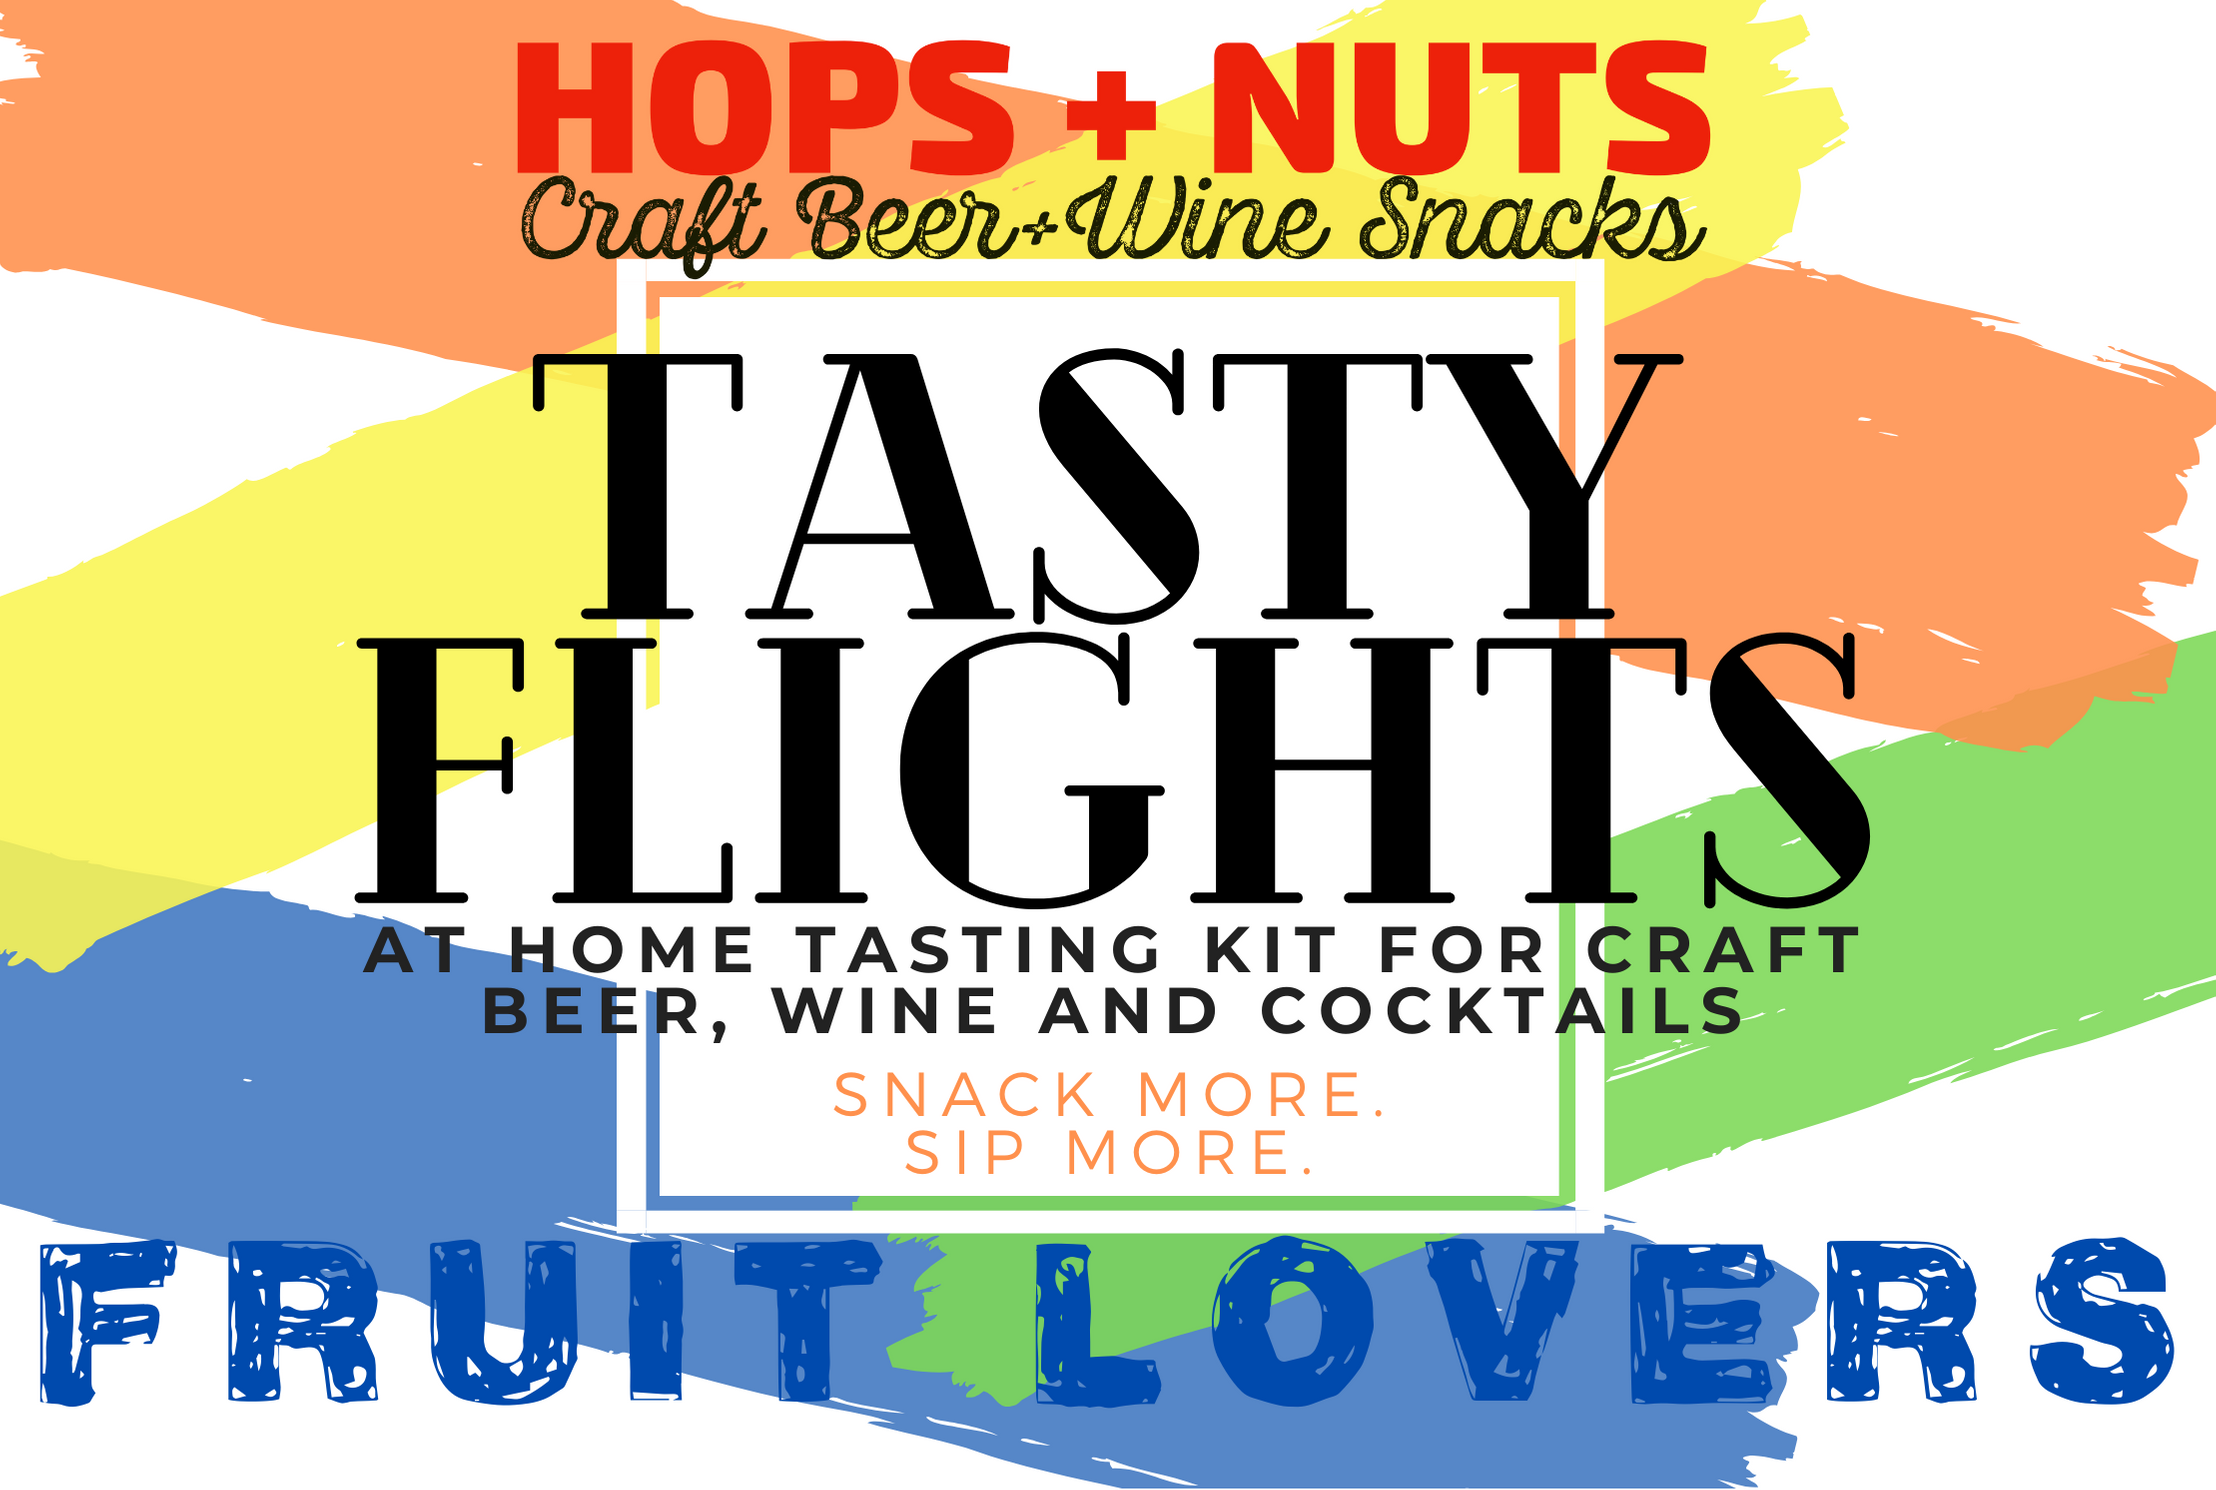 Tasty Flights At-Home Tasting Kit : FRUIT LOVERS